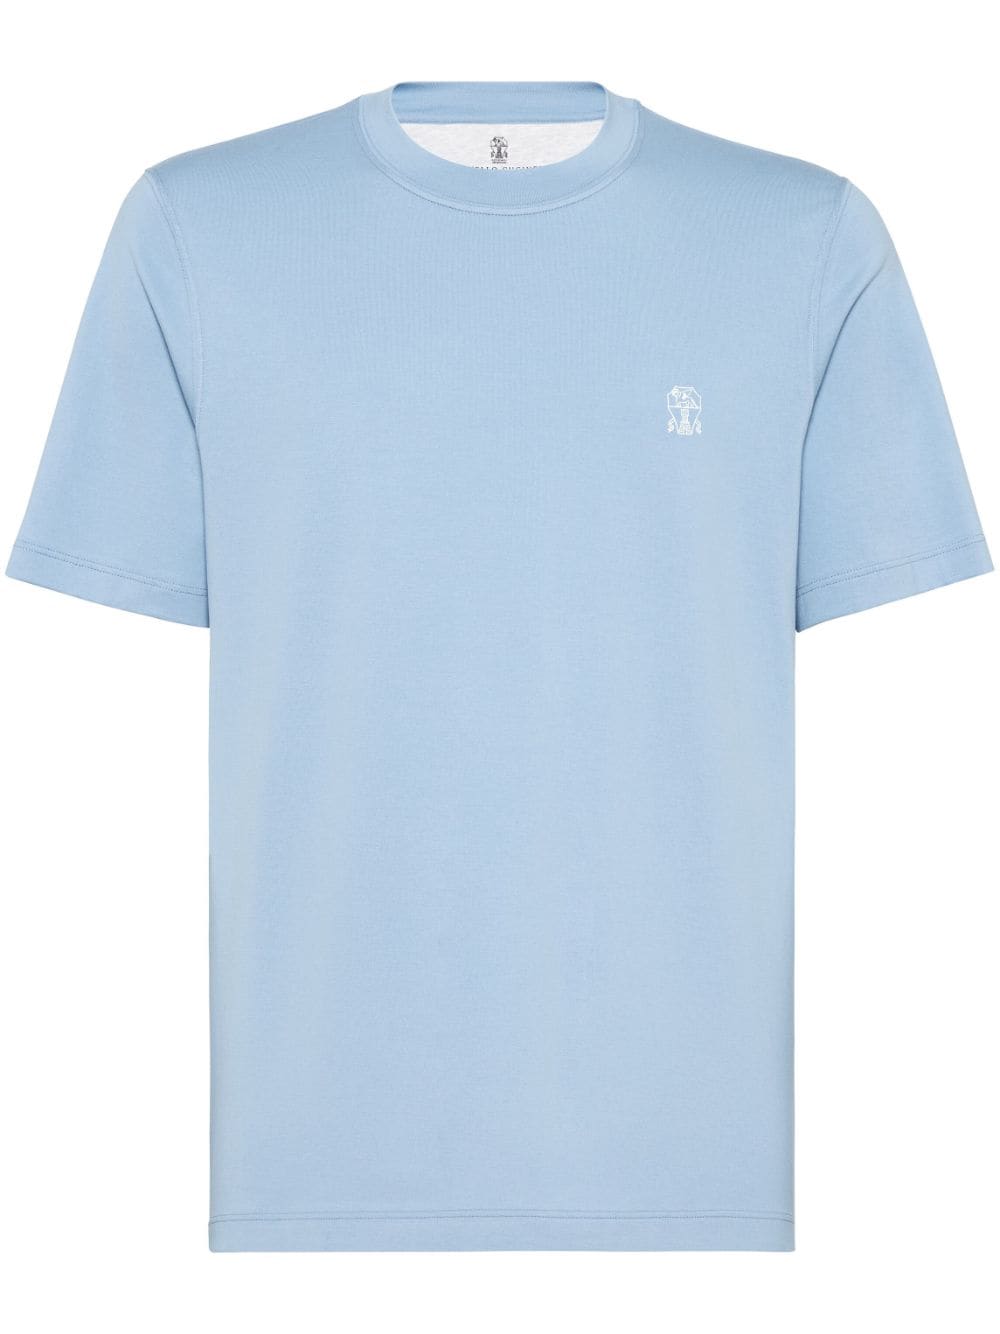 T-shirt azzurra con logo